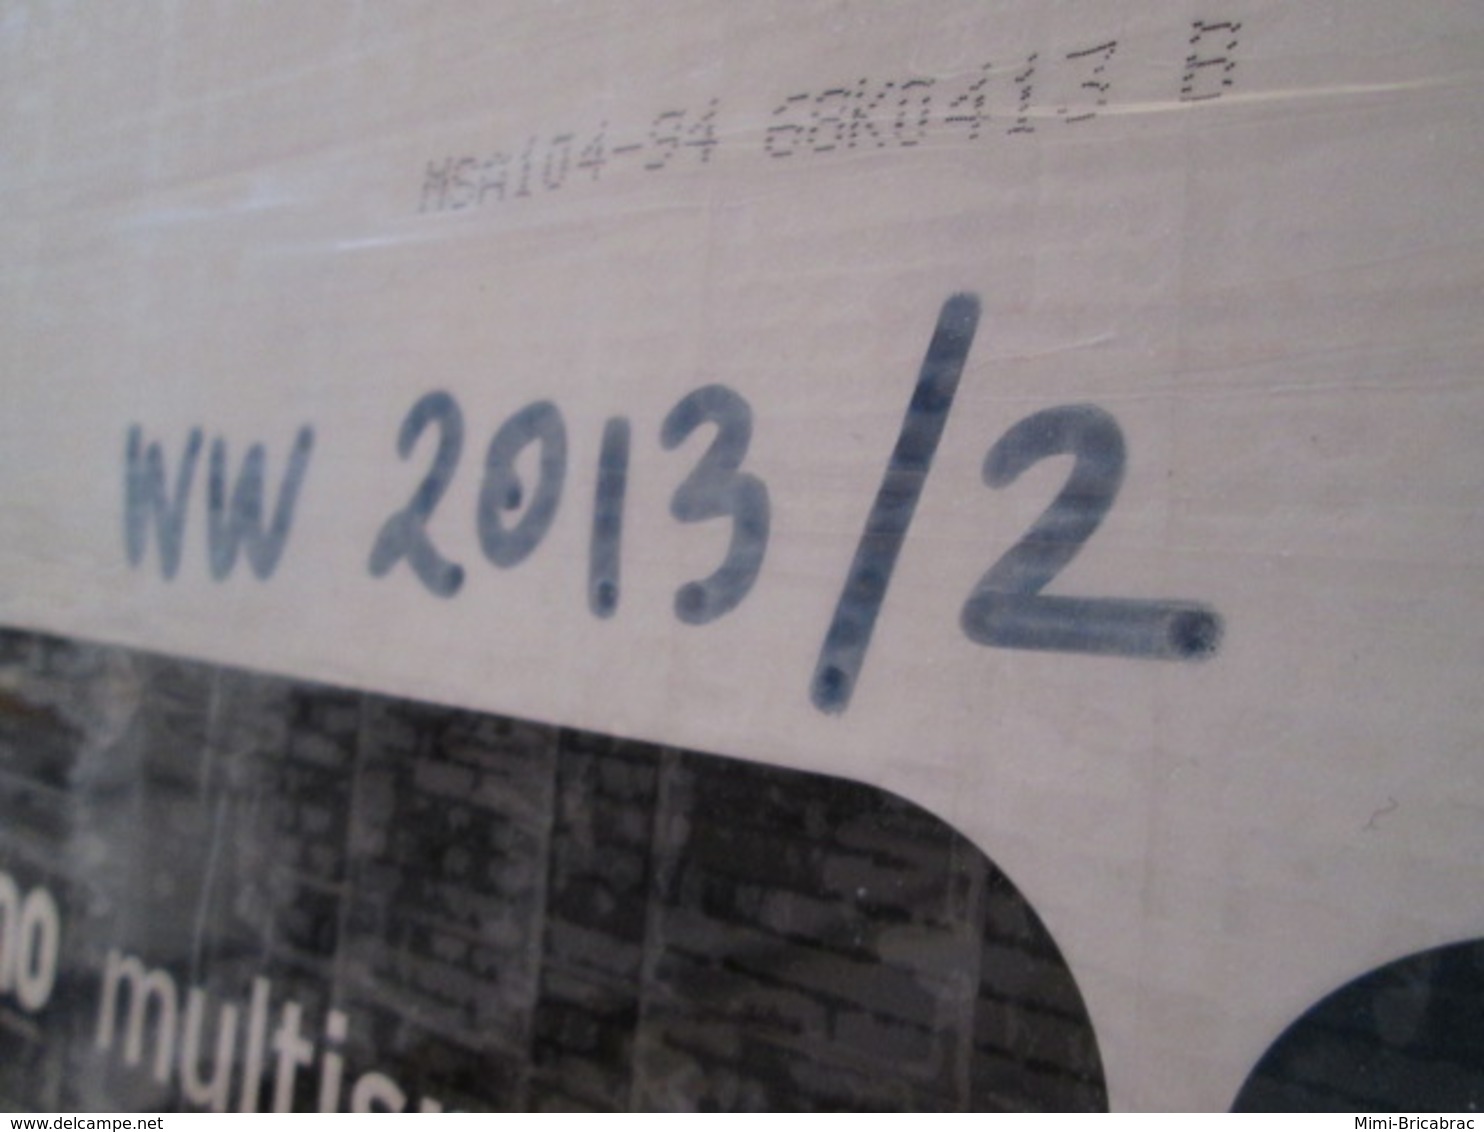 WW2013-2 Revue maquettiste plastique / TAMIYA MODEL MAGAZINE n°70 de 2004 valait 5,40€ , sommaire en photo 2 ou 3